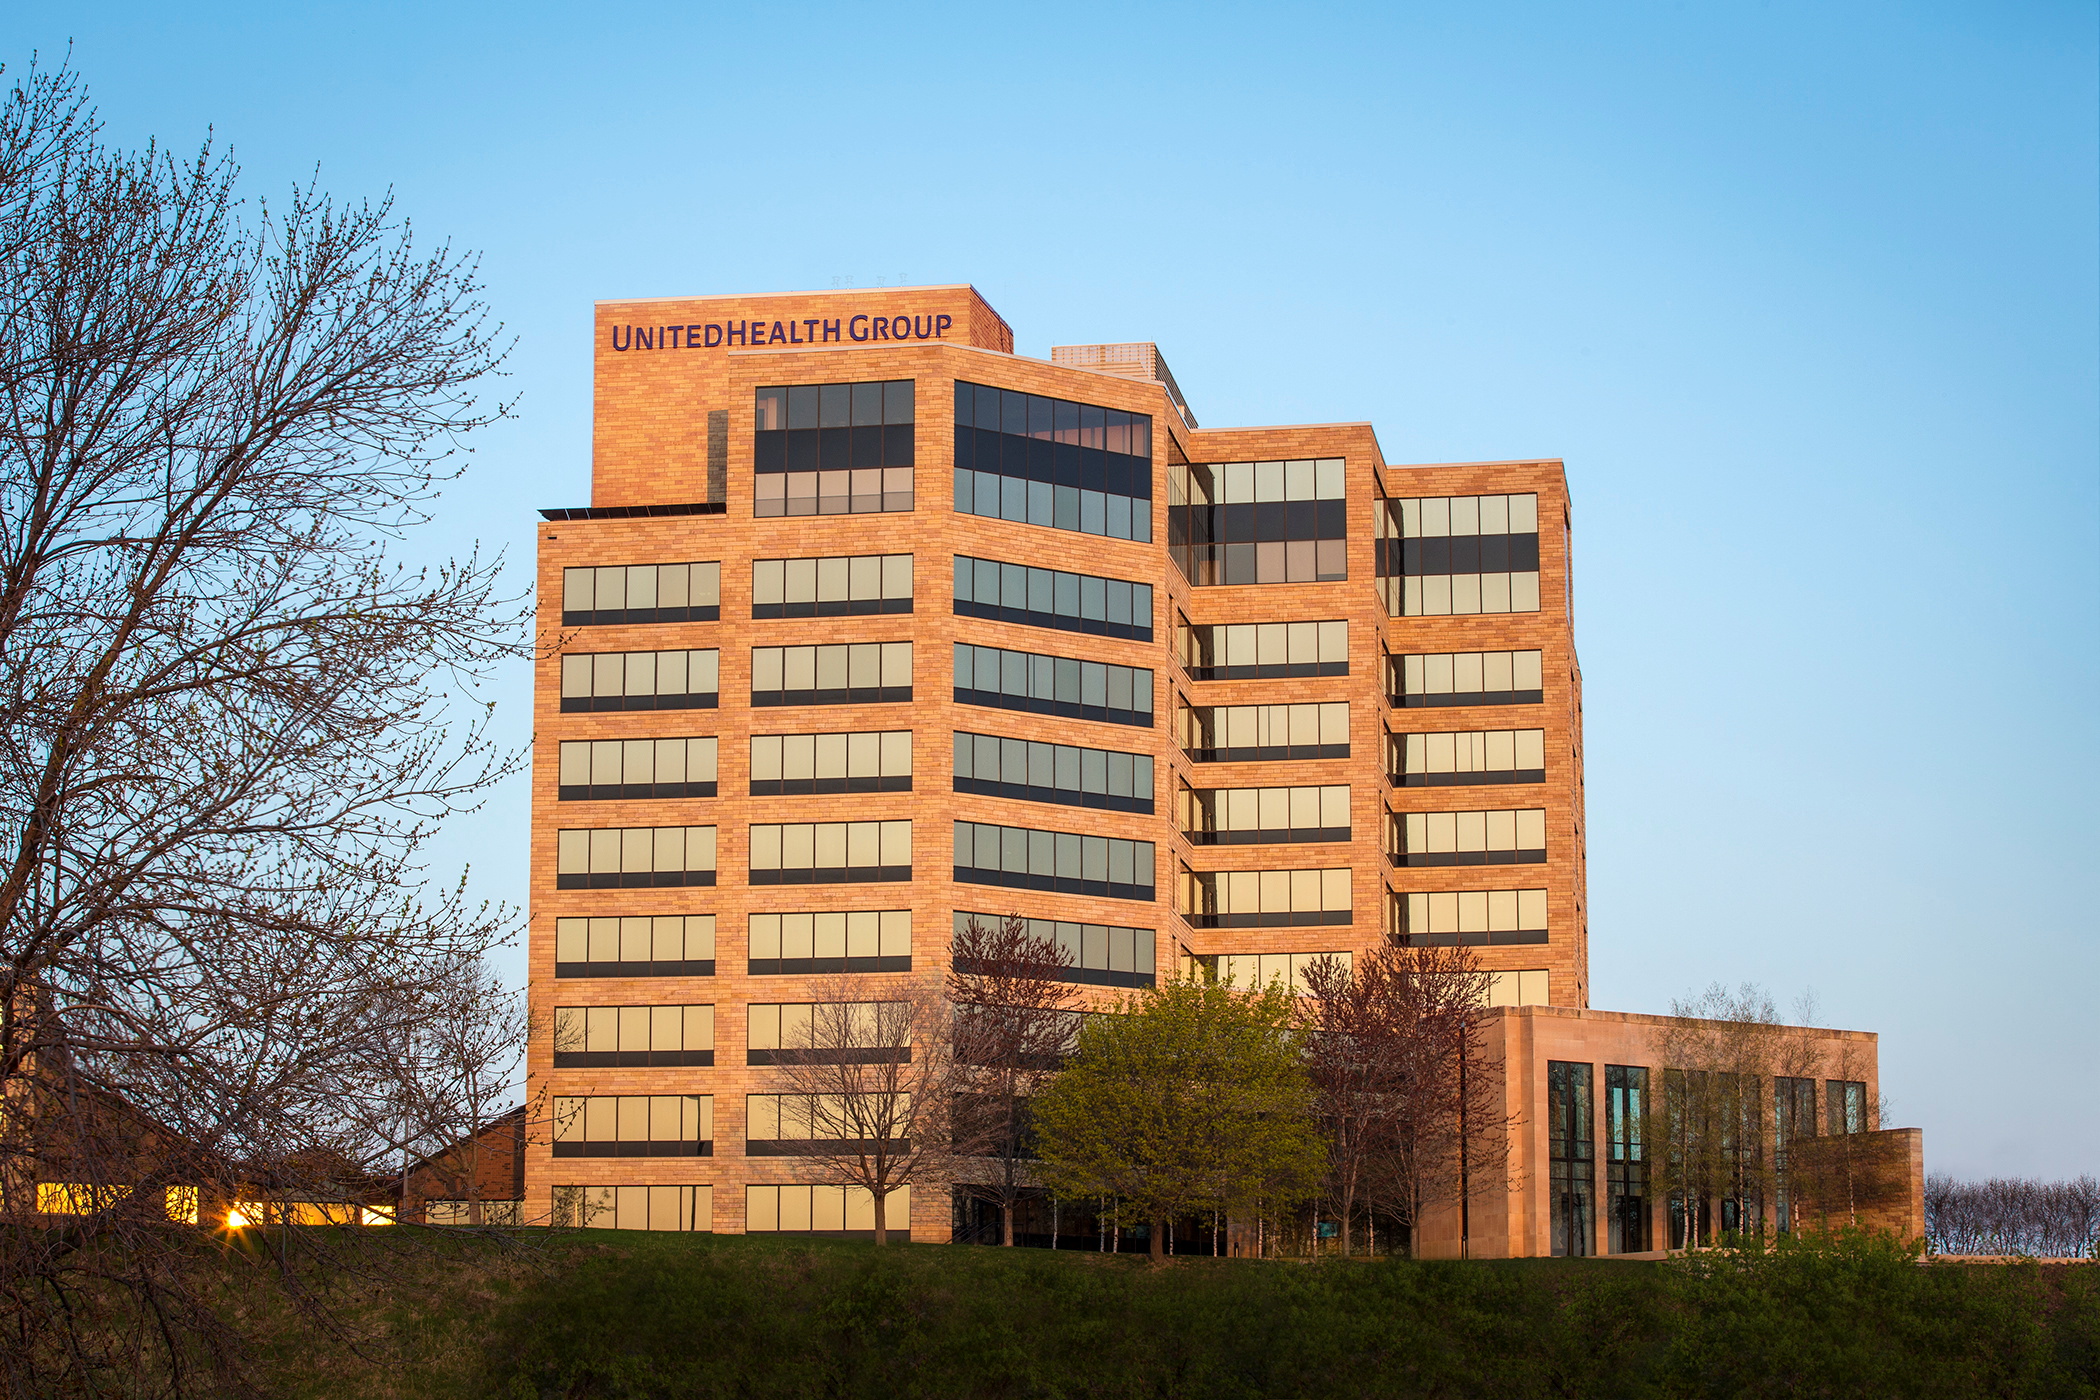 UnitedHealth Group's headquarters building is seen in Minnetonka, Minnesota